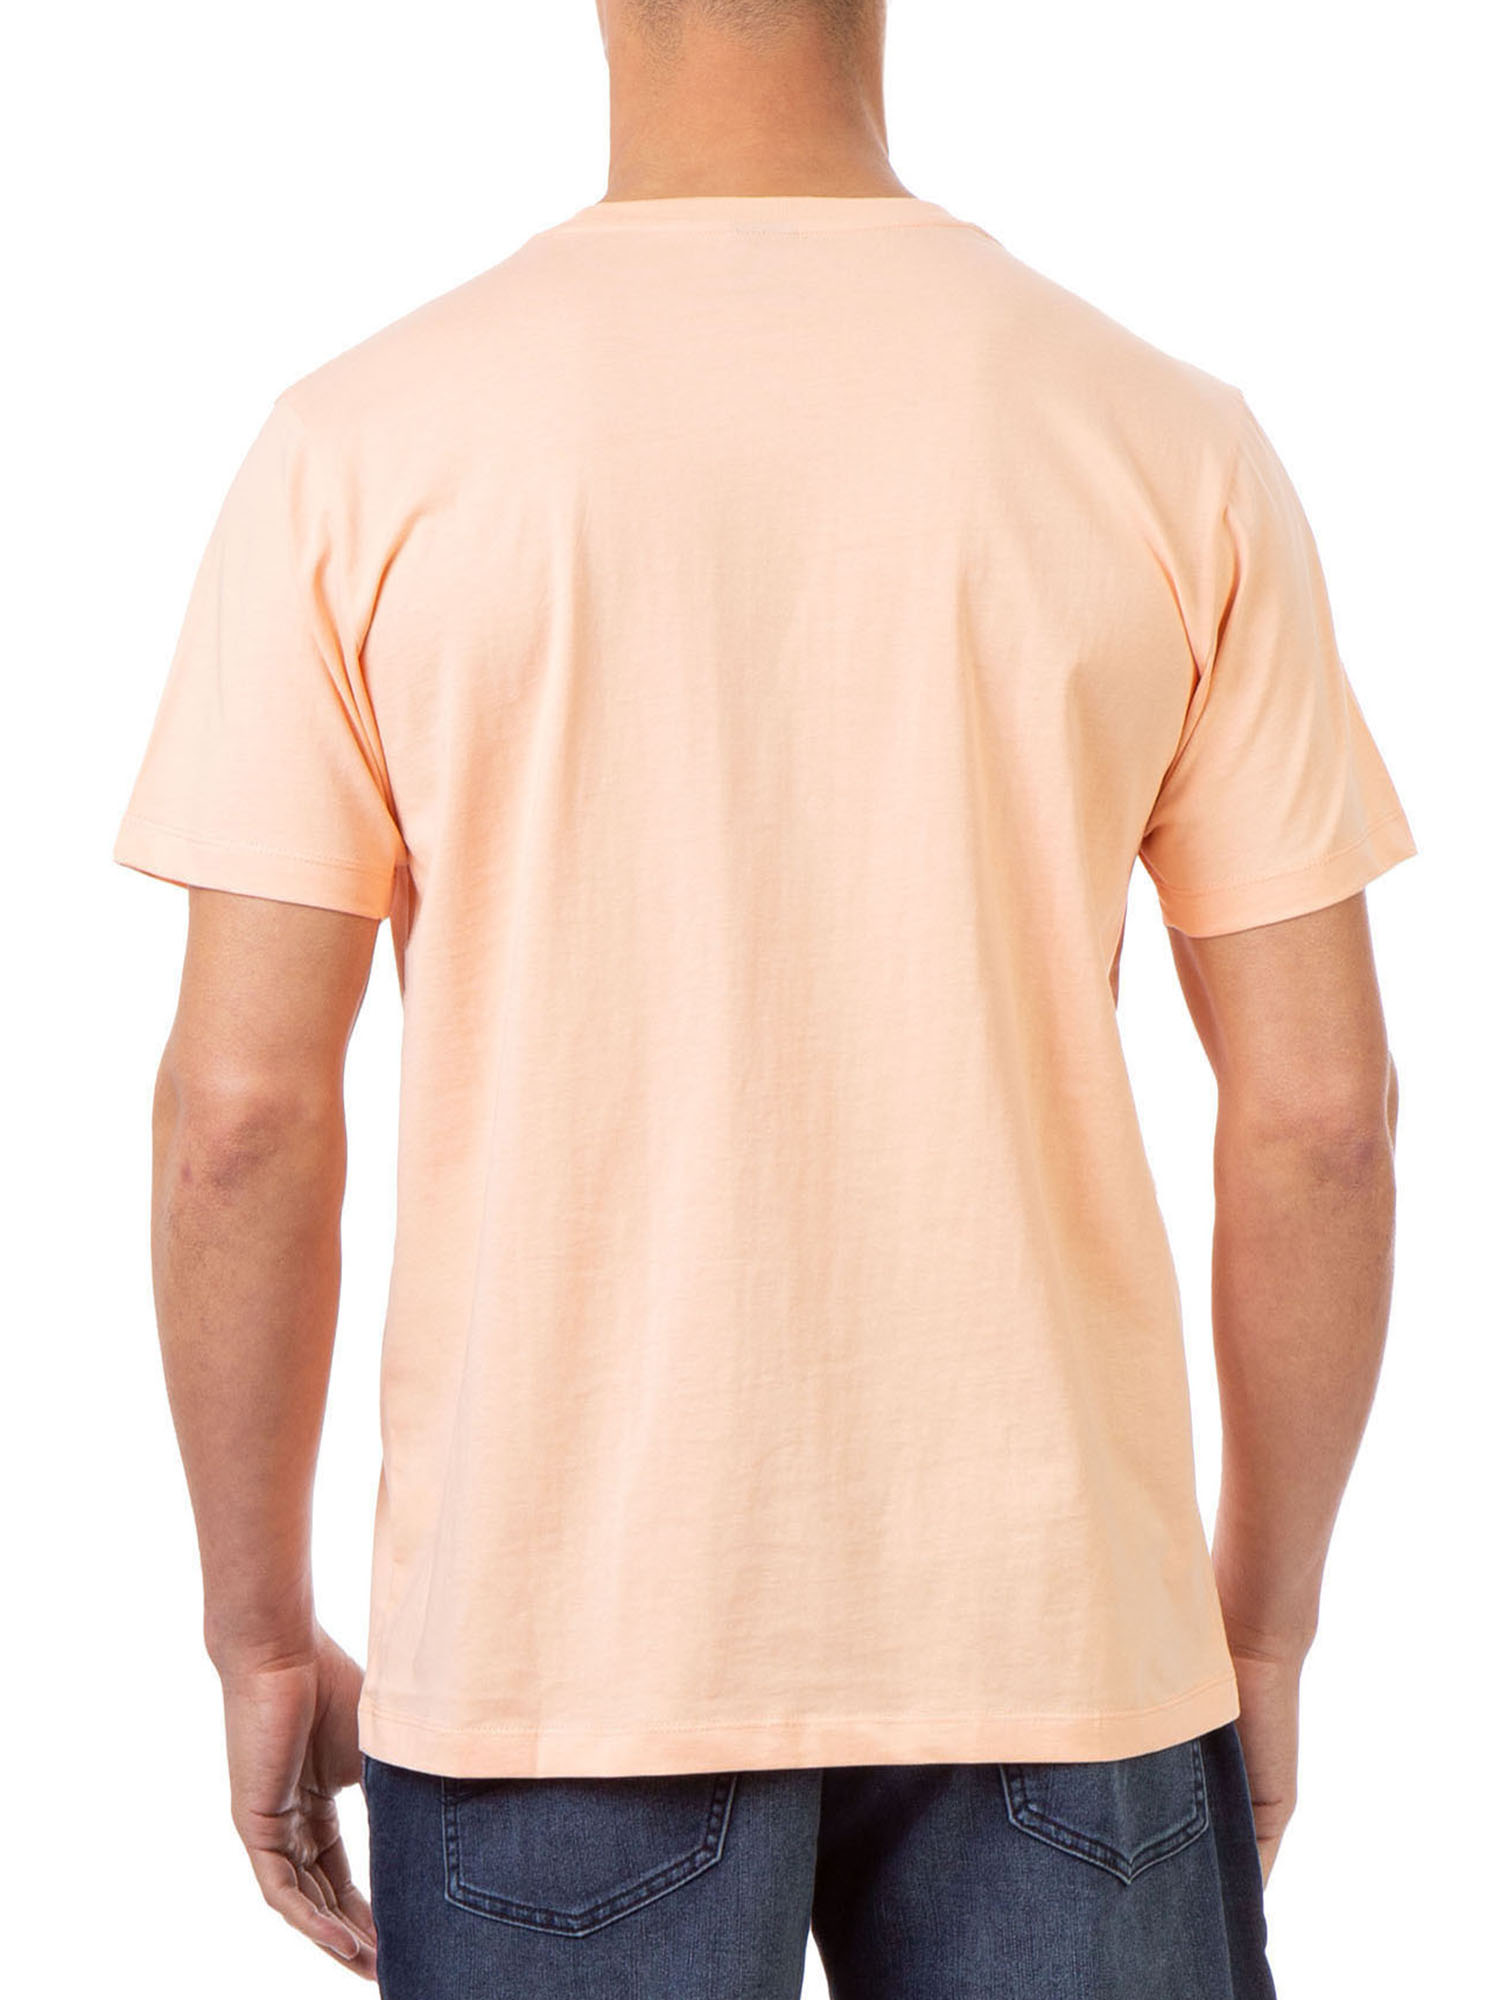 U.S. Polo Assn. Men's Short Sleeve Crew Neck T-Shirt - image 3 of 4